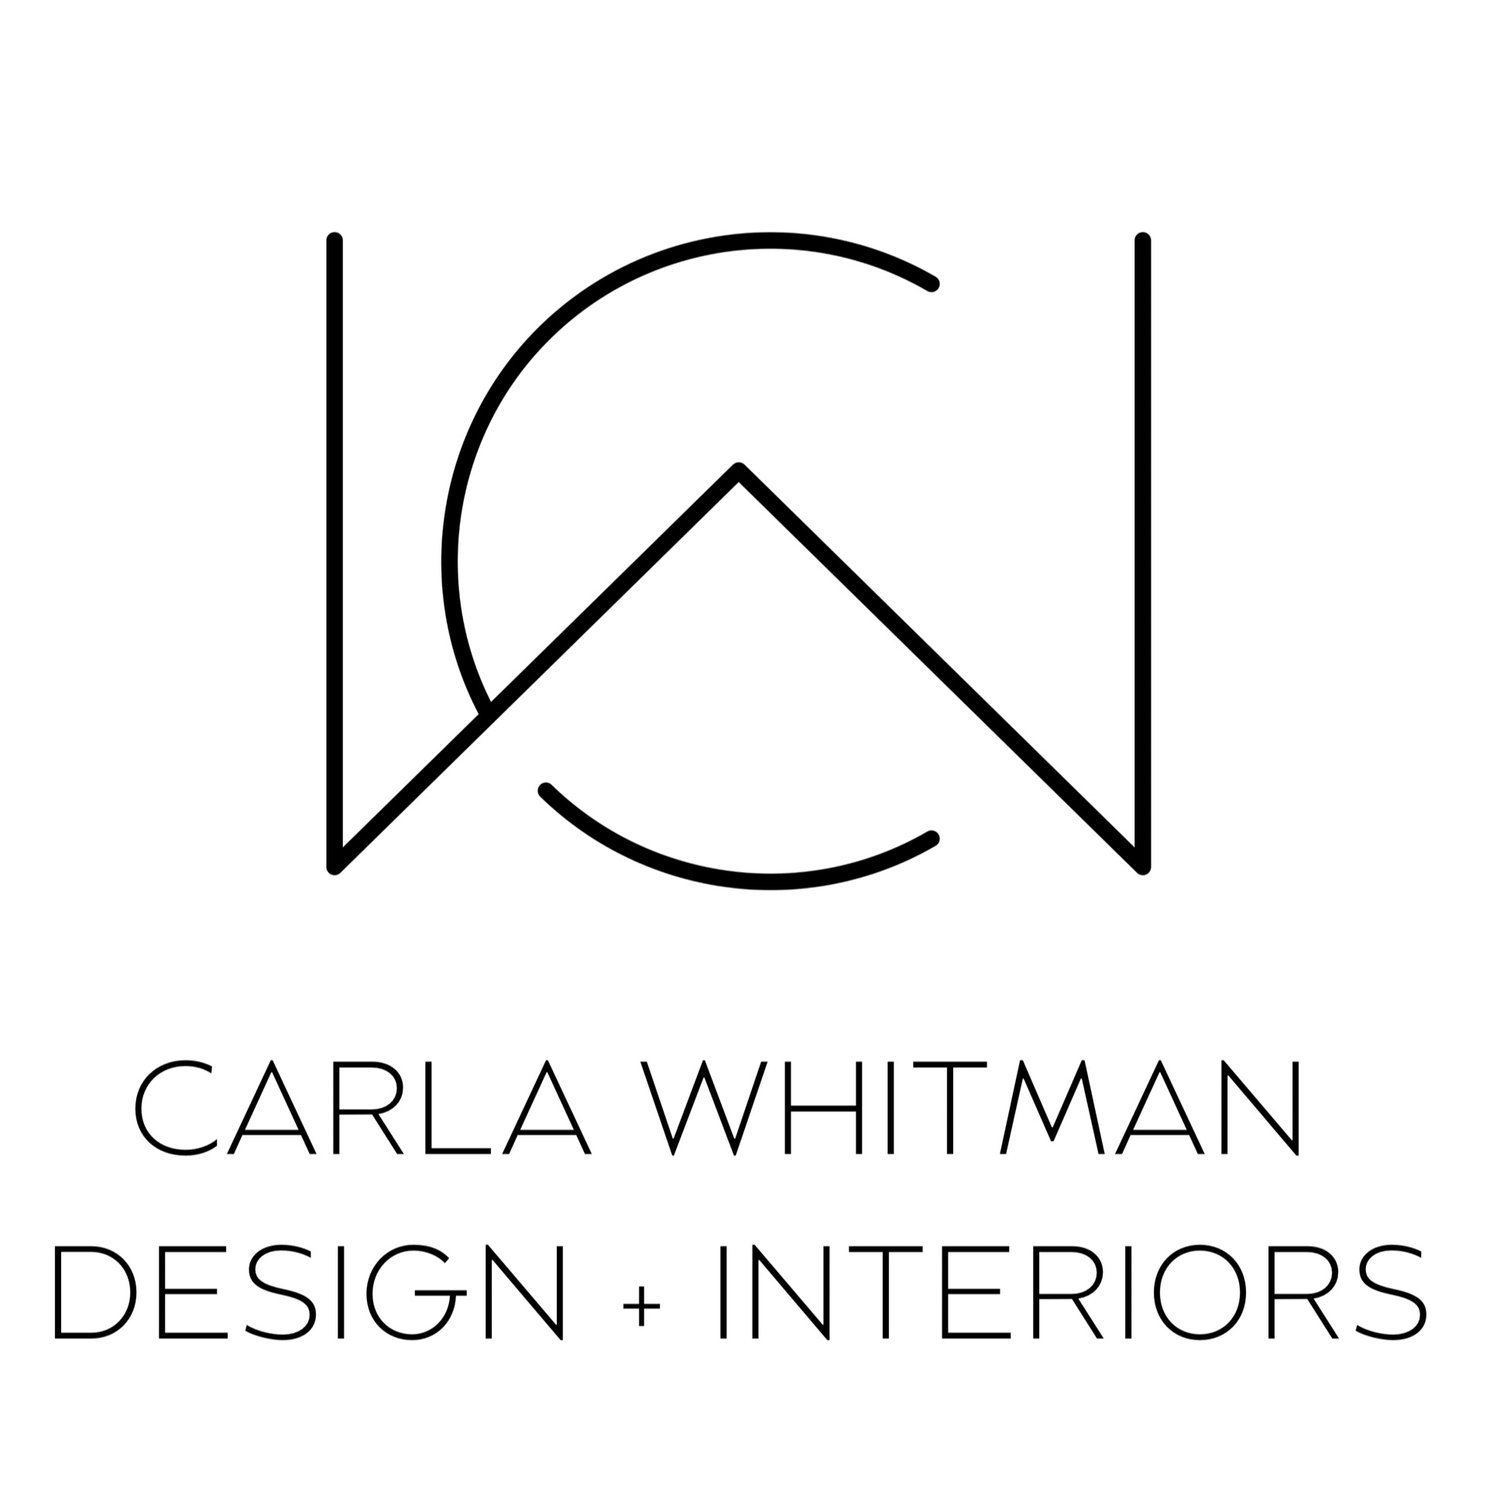 Carla Whitman Design